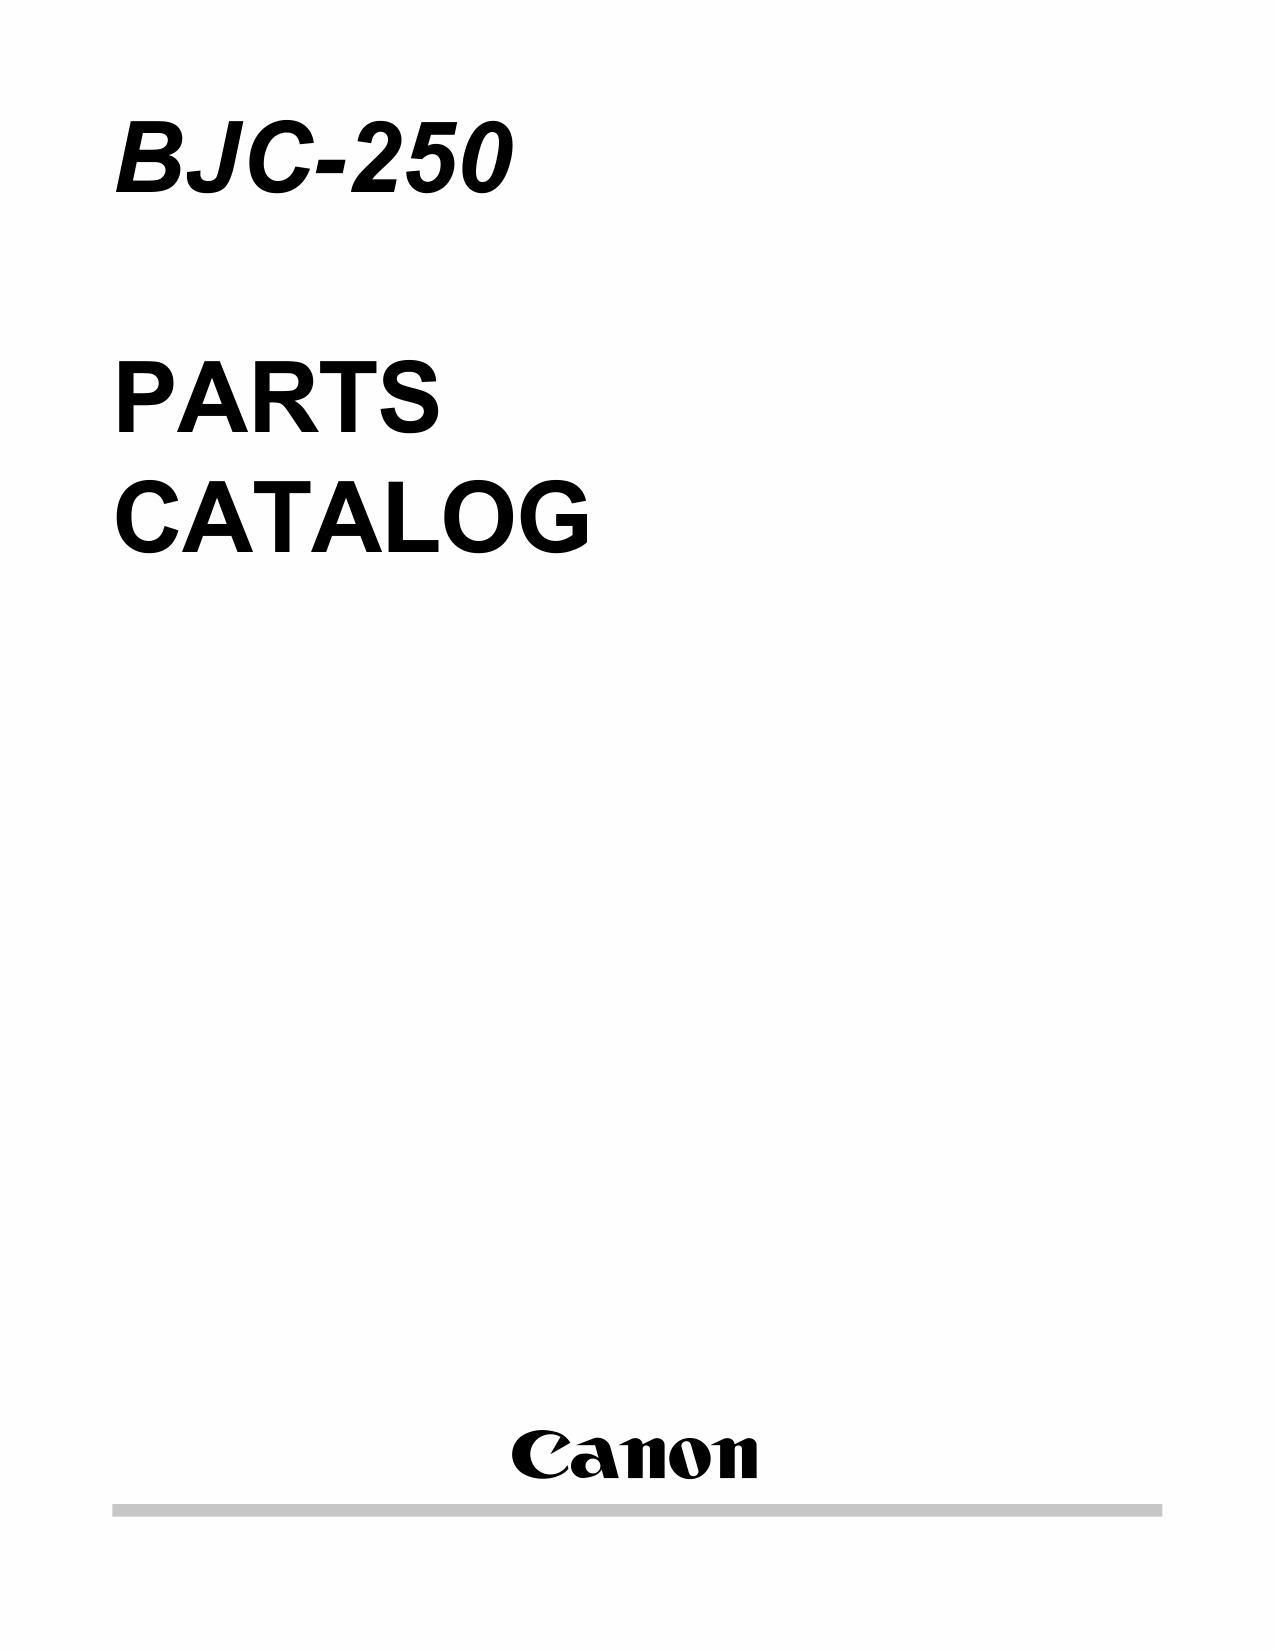 Canon BubbleJet BJC-250 Parts Catalog Manual-1